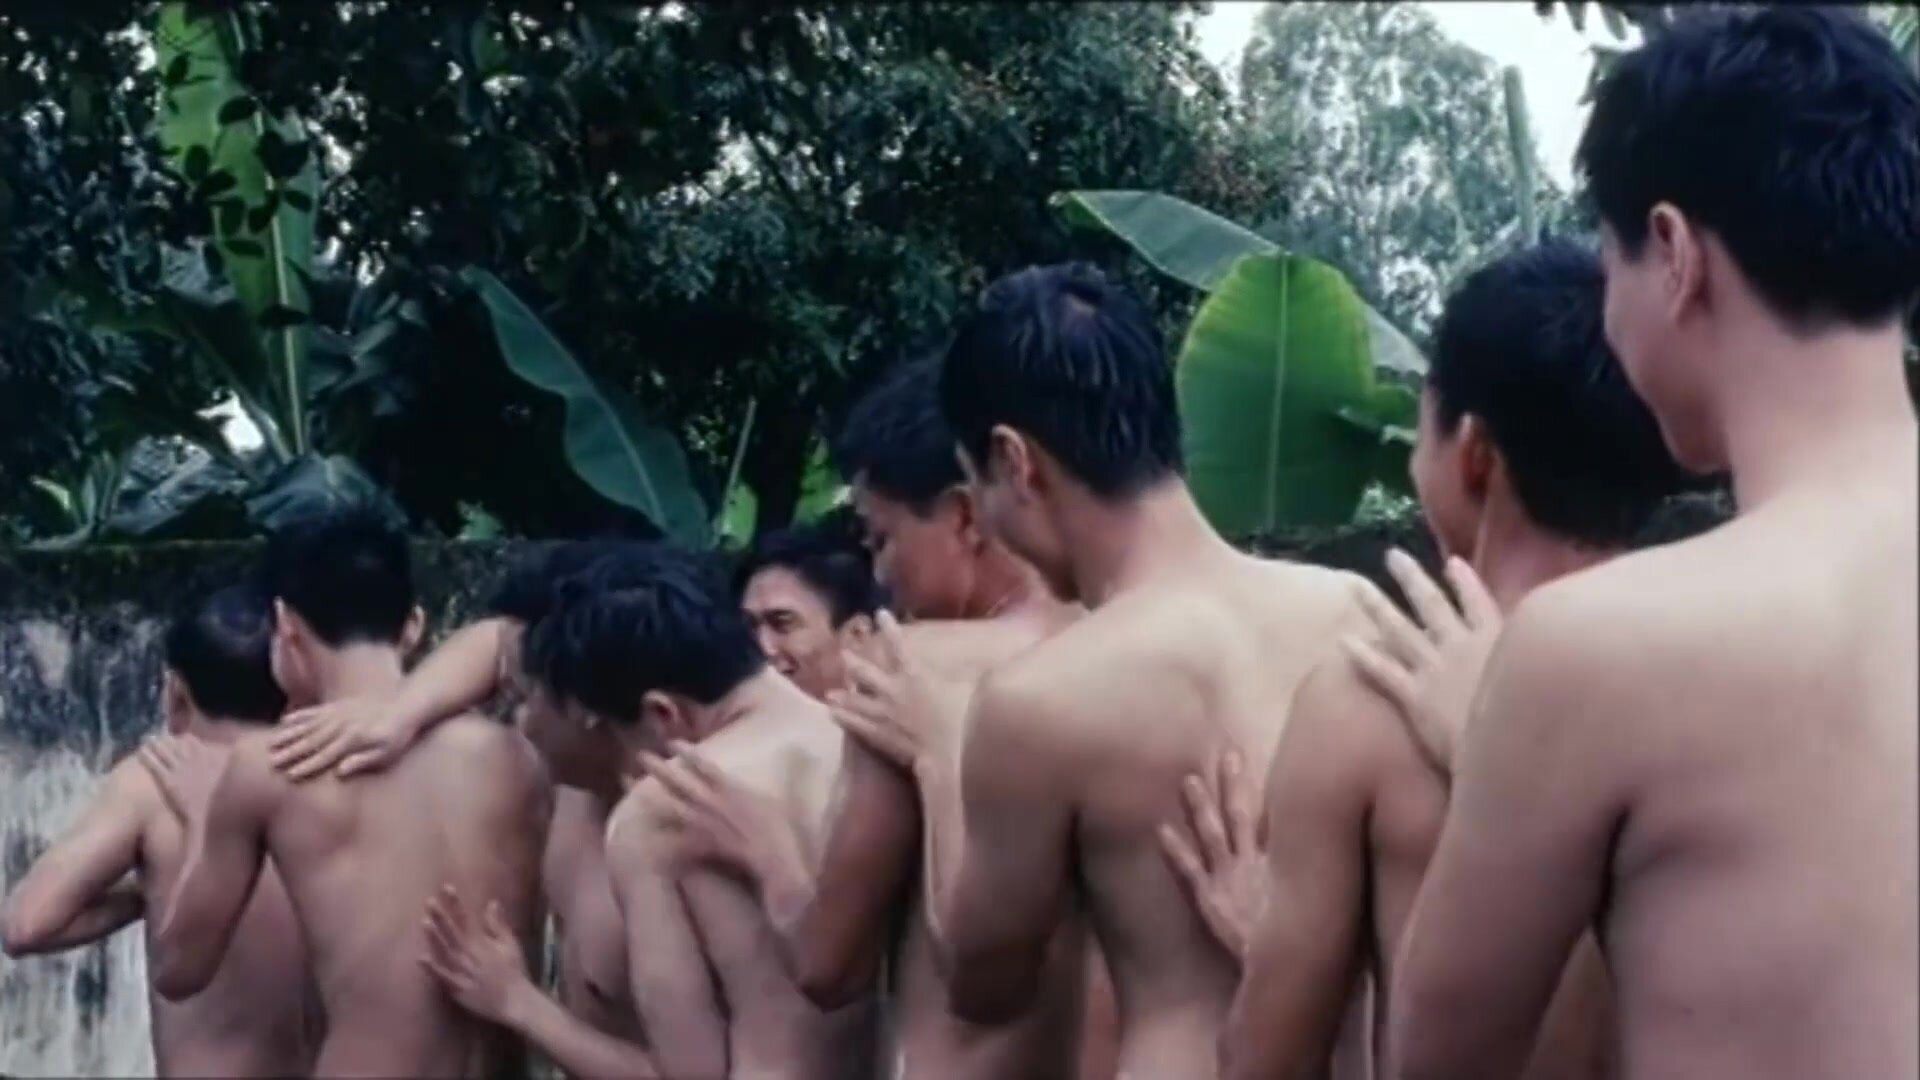 Vietnamese Gay Men Porn - Vietnamese Military Boys Take Shower and Run Naked - ThisVid.com